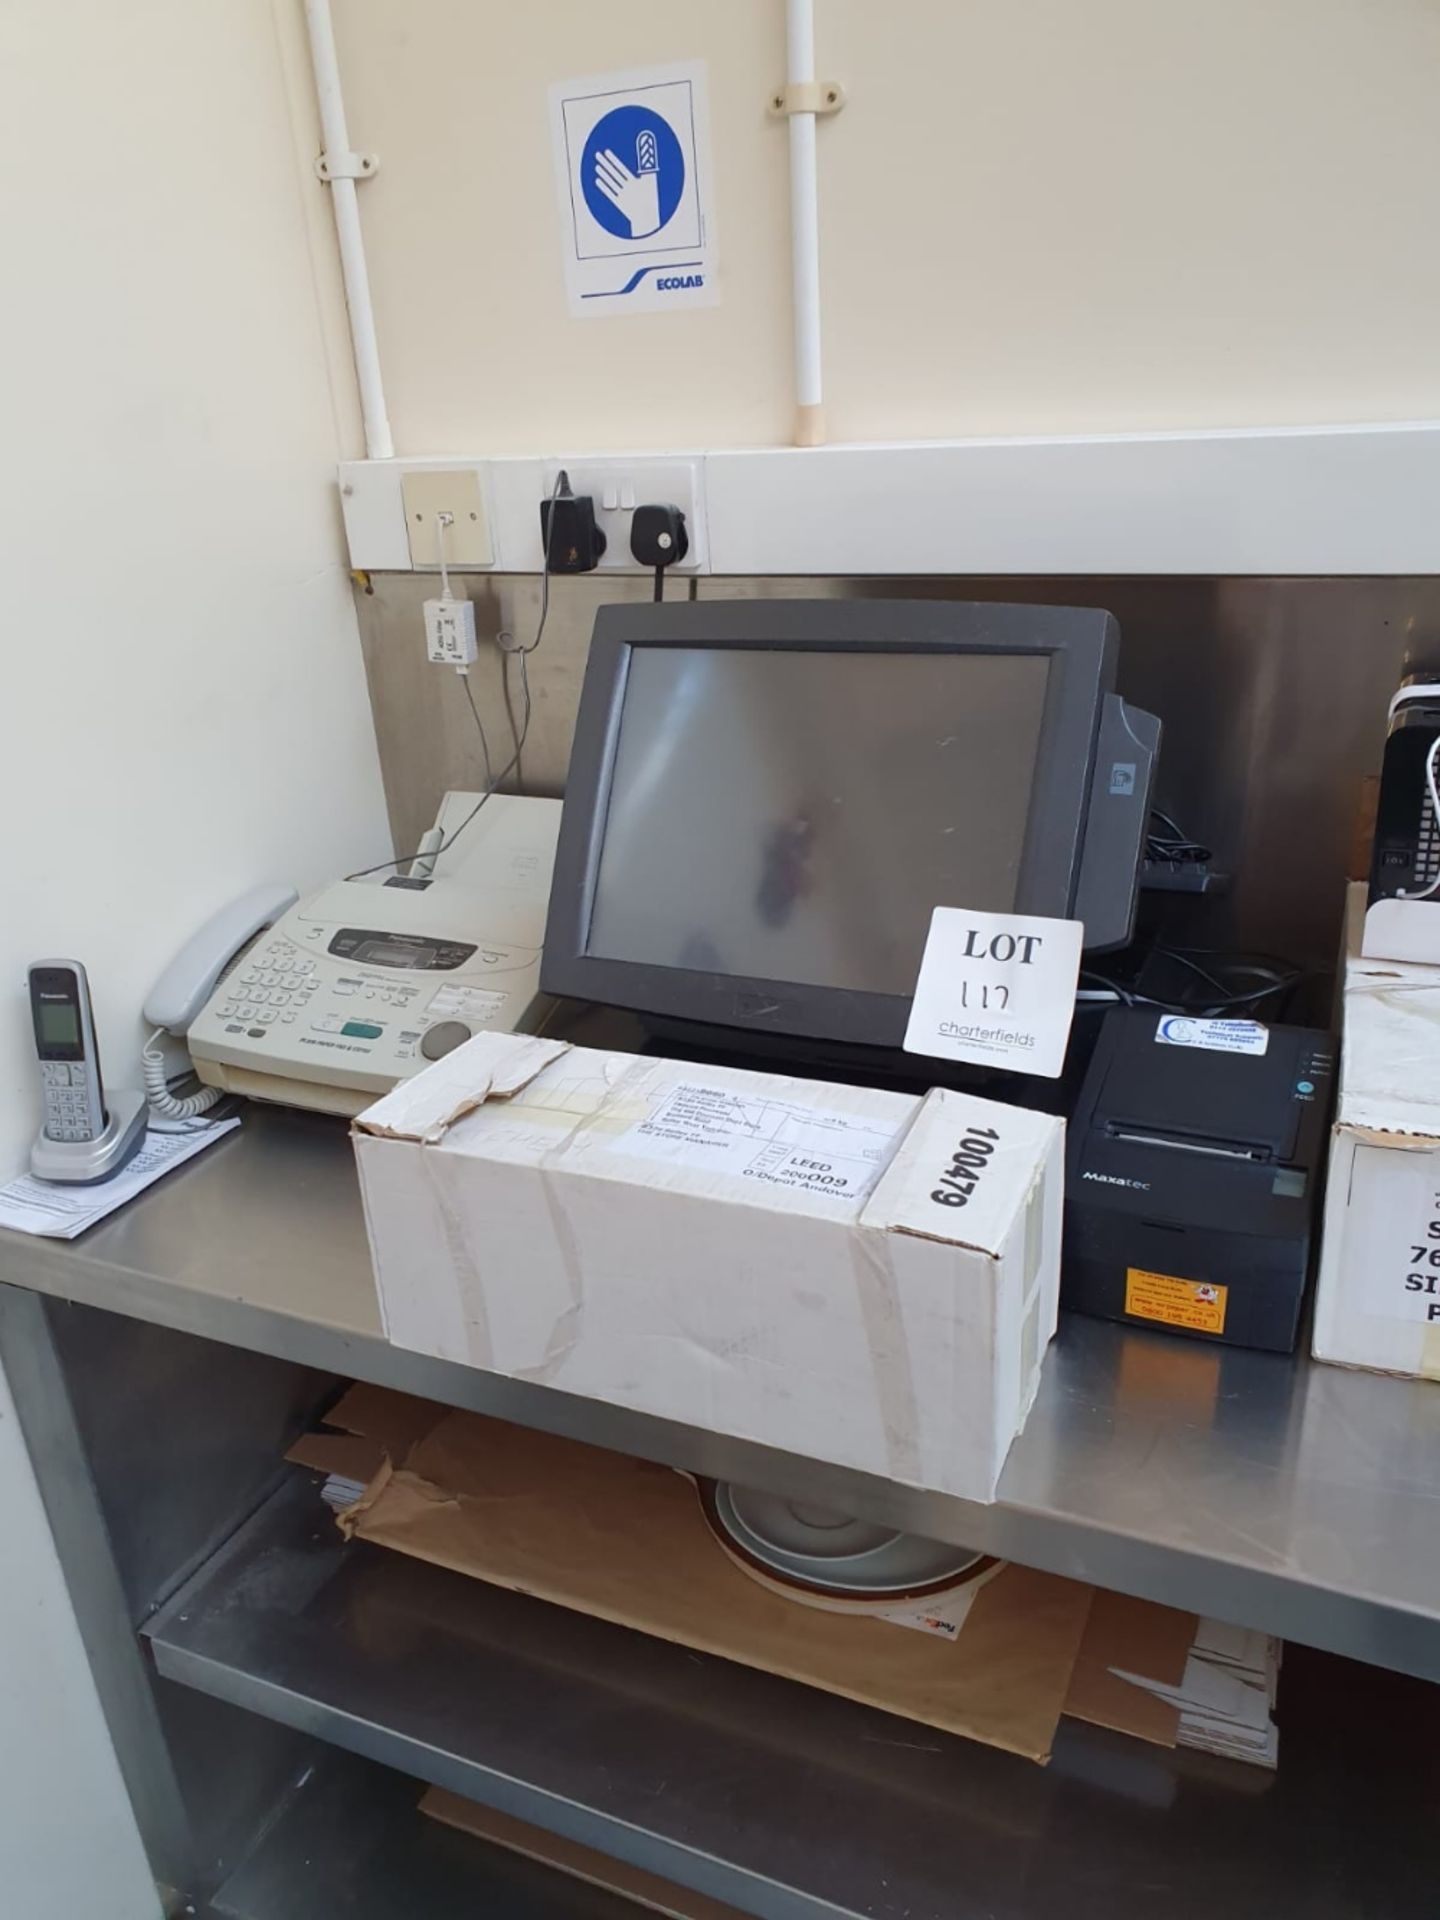 Cash till with cash drawer, receipt printer, printer rolls and Panasonic fax machine